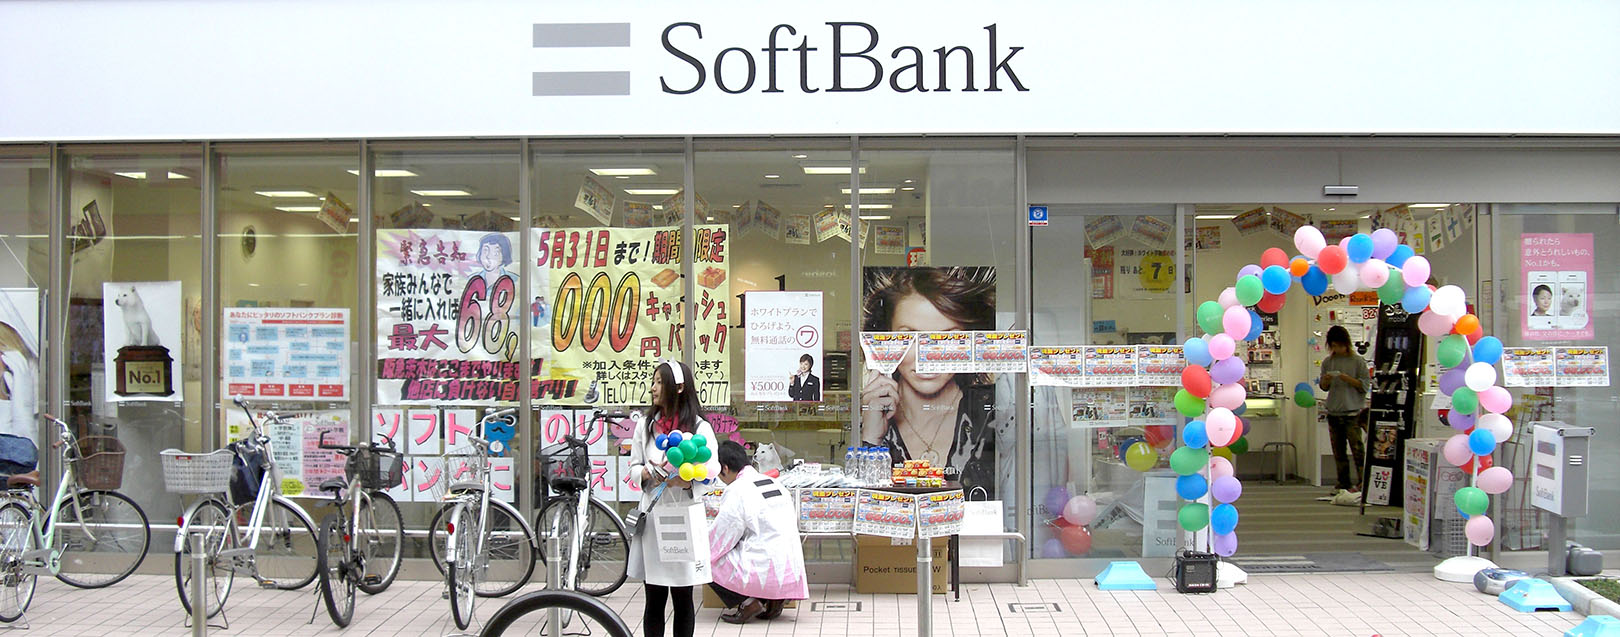 Softbank denies participation in Vodafone-Idea merger